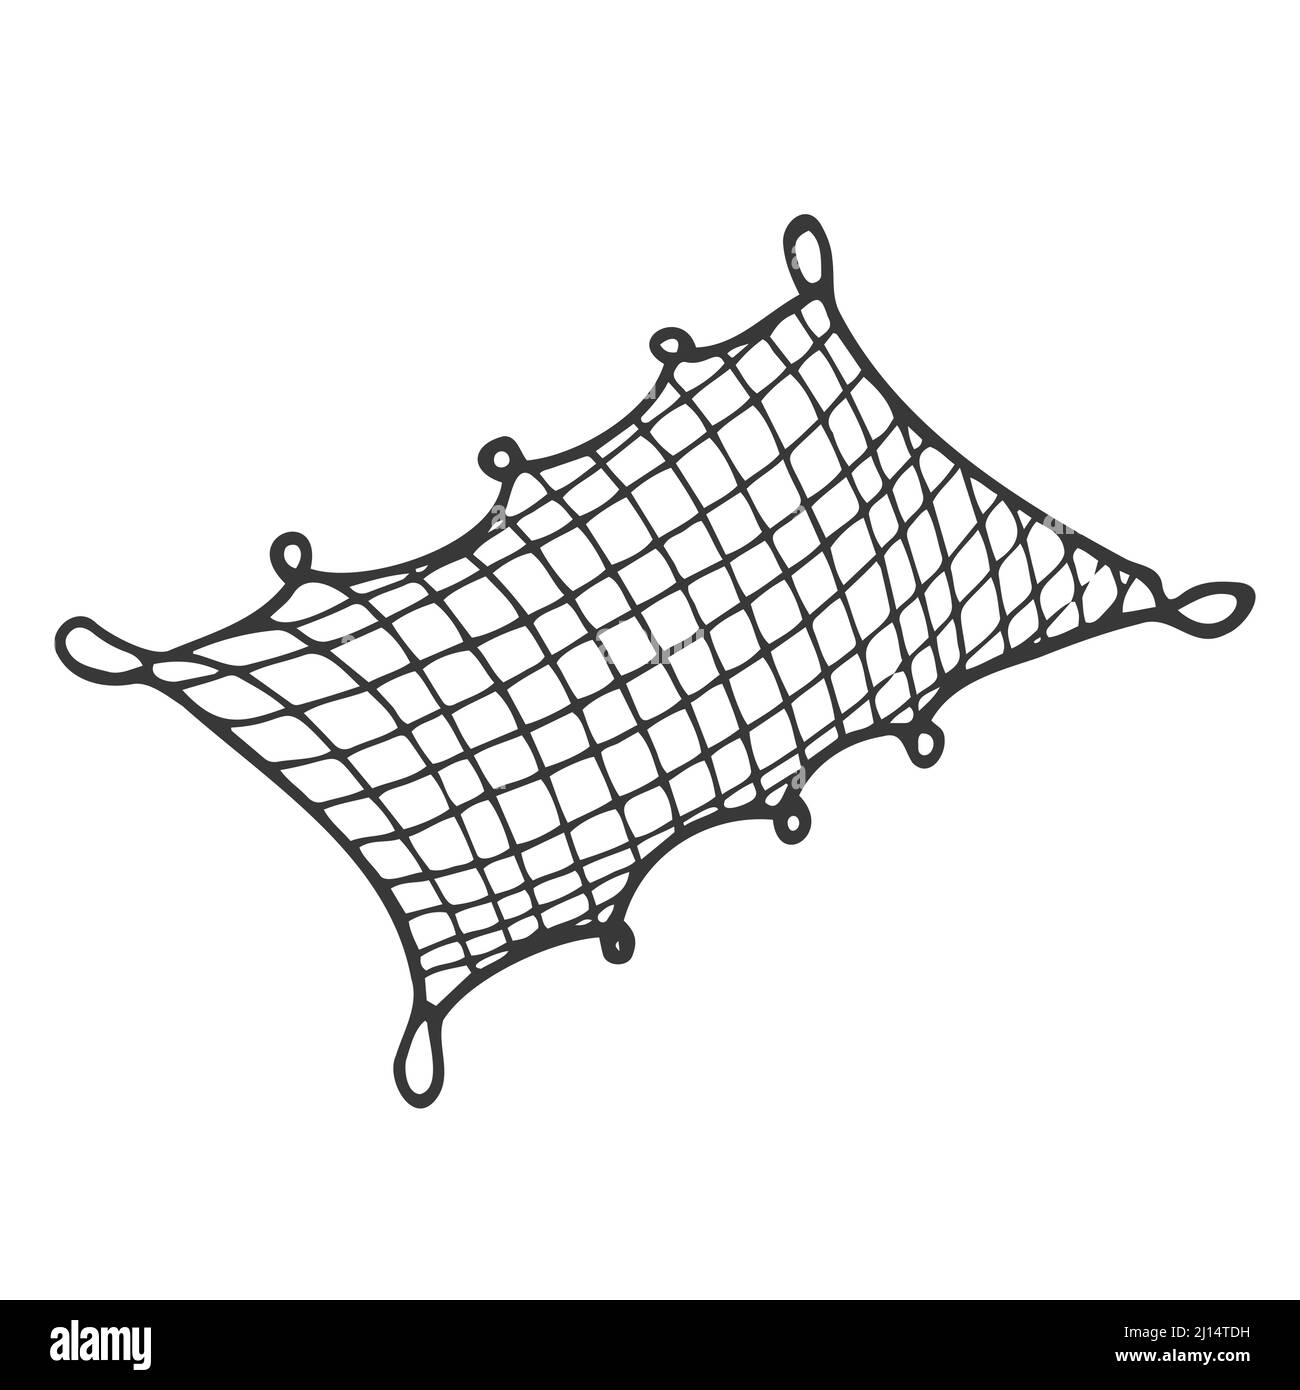 https://c8.alamy.com/comp/2J14TDH/doodle-fish-net-vector-hand-drawn-fishing-concept-isolated-vector-2J14TDH.jpg